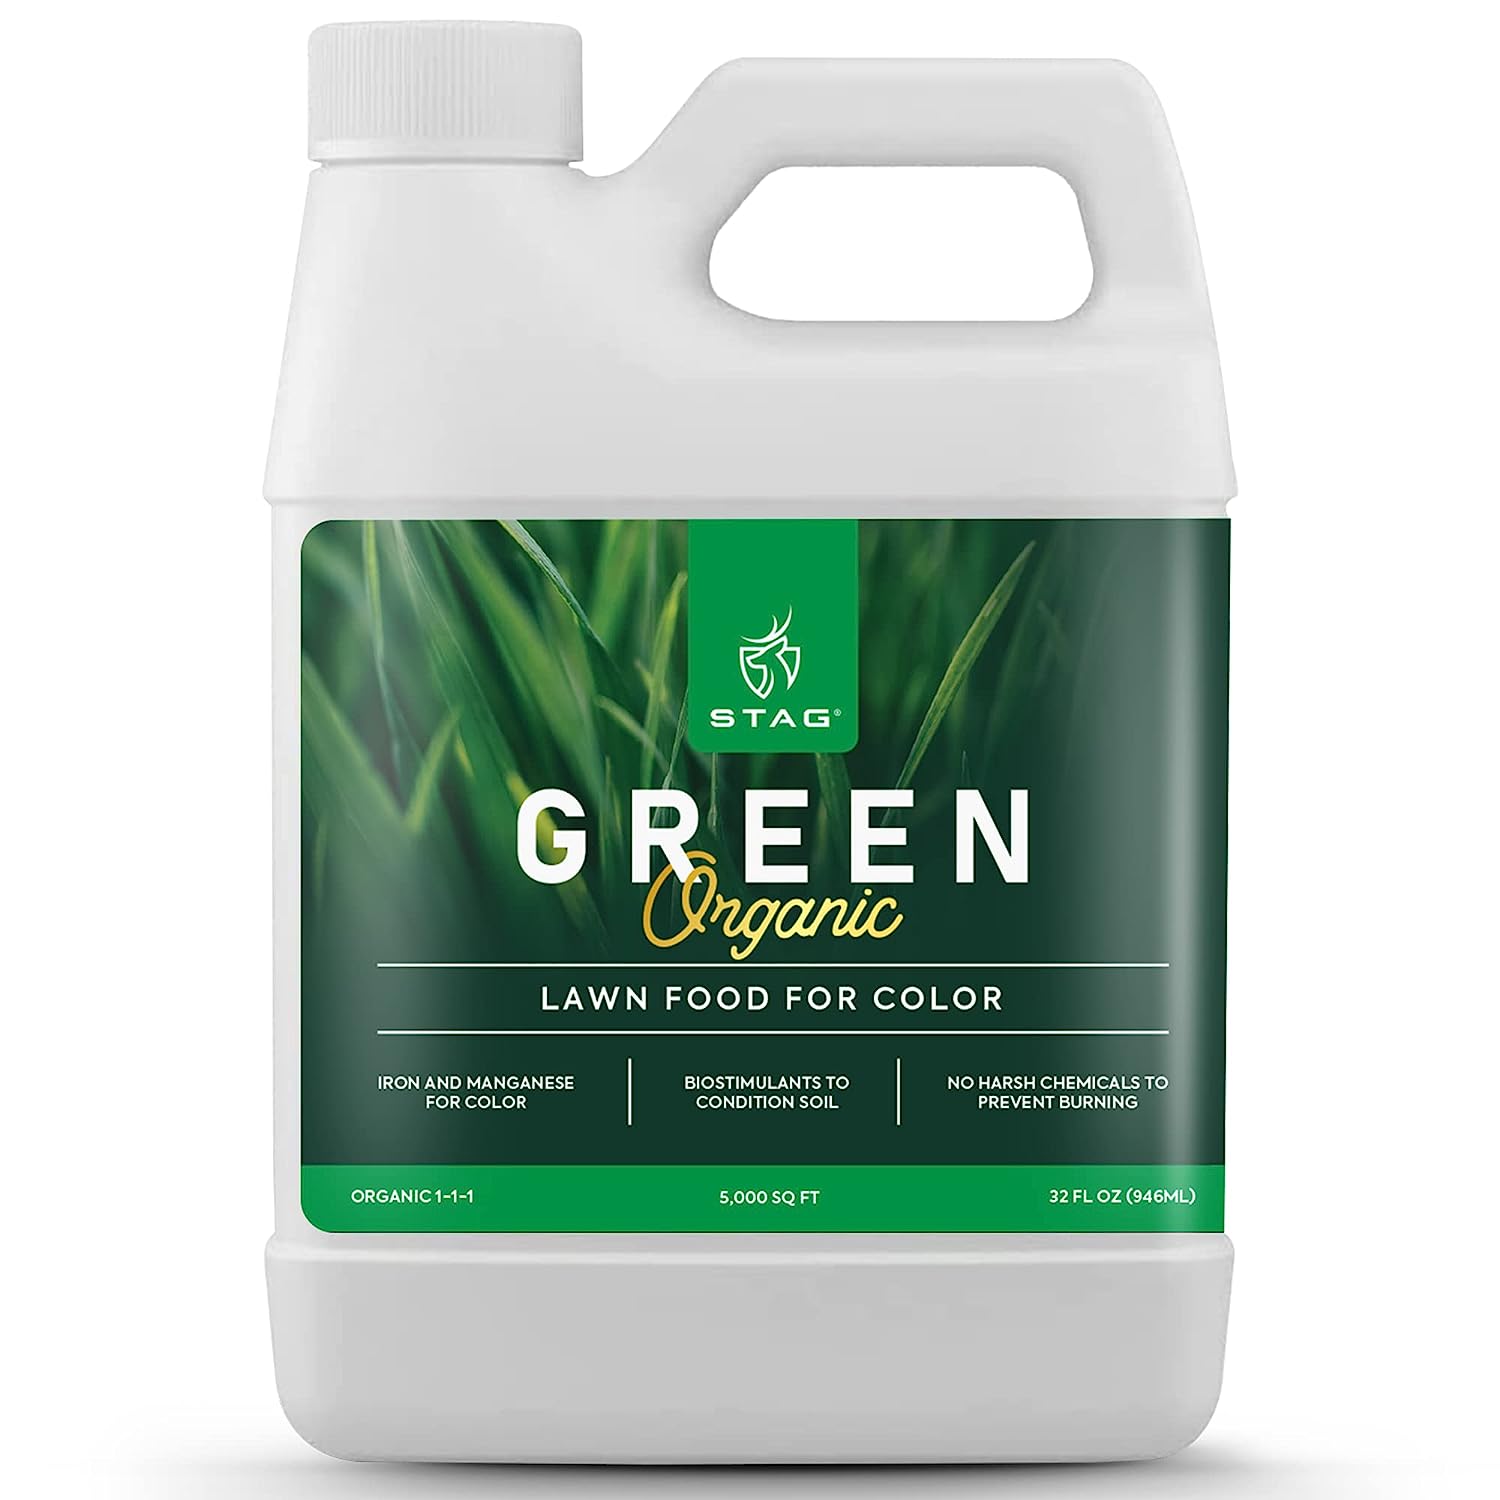 Green Organic Fertilizer - Grass Fertilizer for Lawn [...]